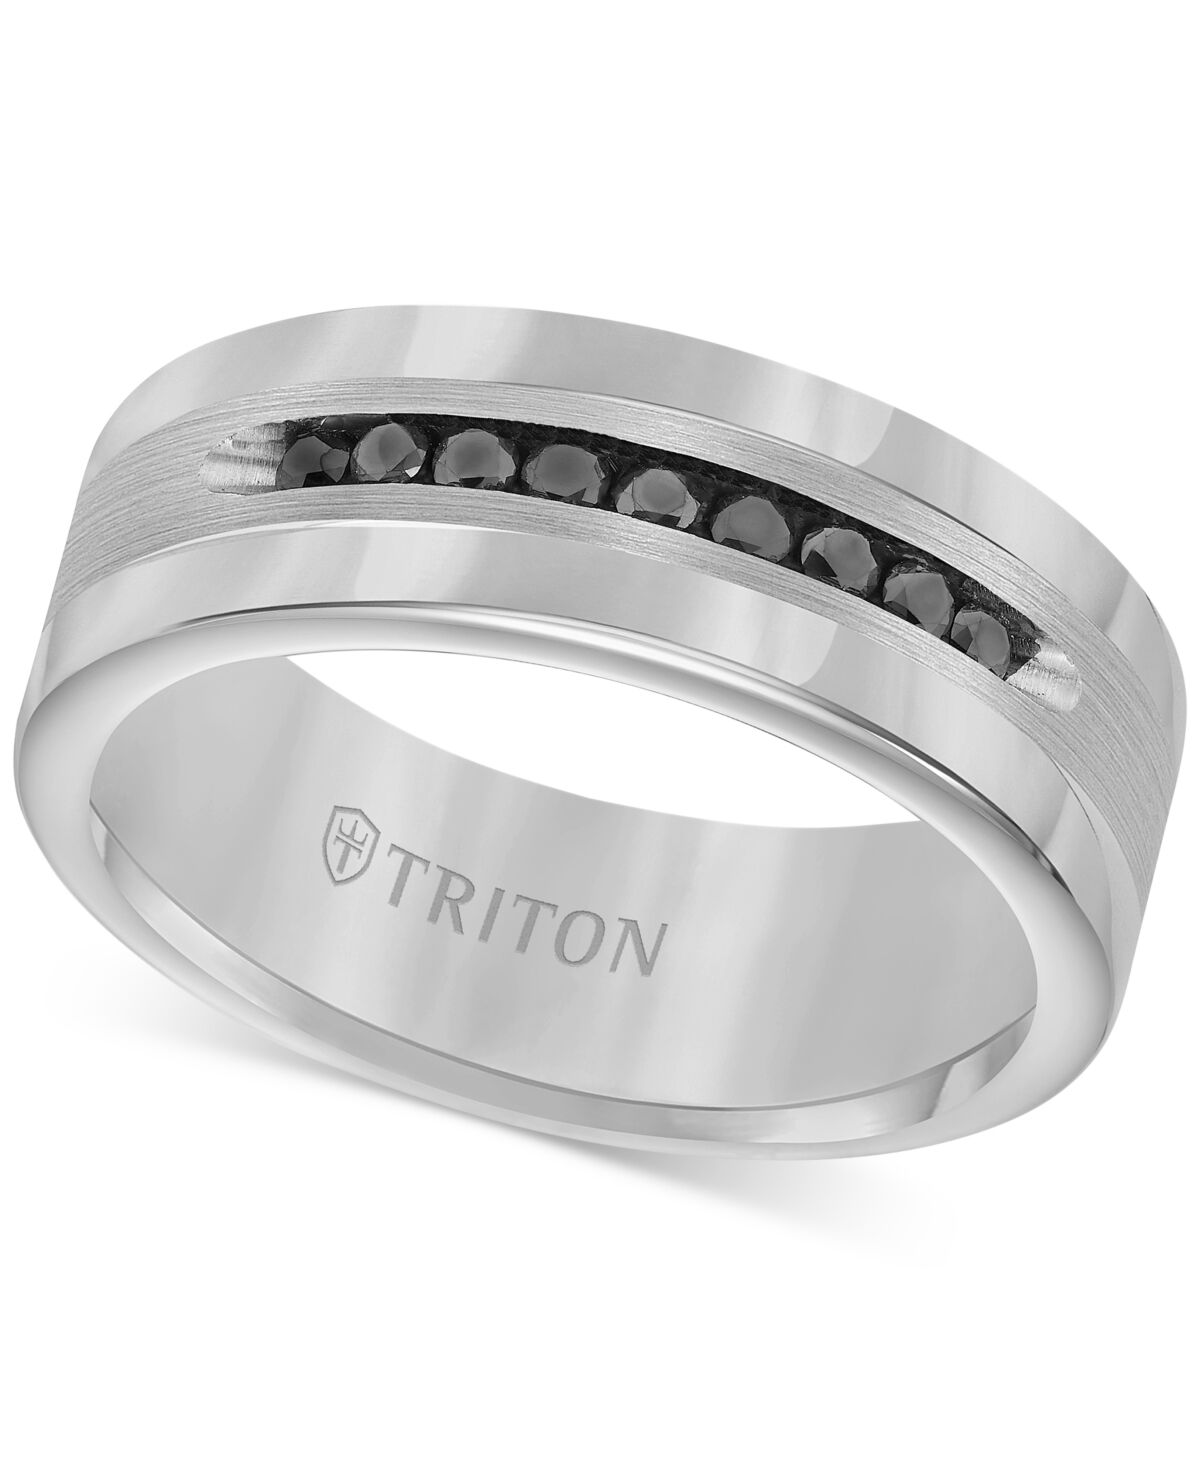 Triton Men's Tungsten and Sterling Silver Ring, Channel-Set Black Diamond Accent Wedding Band - Tungsten